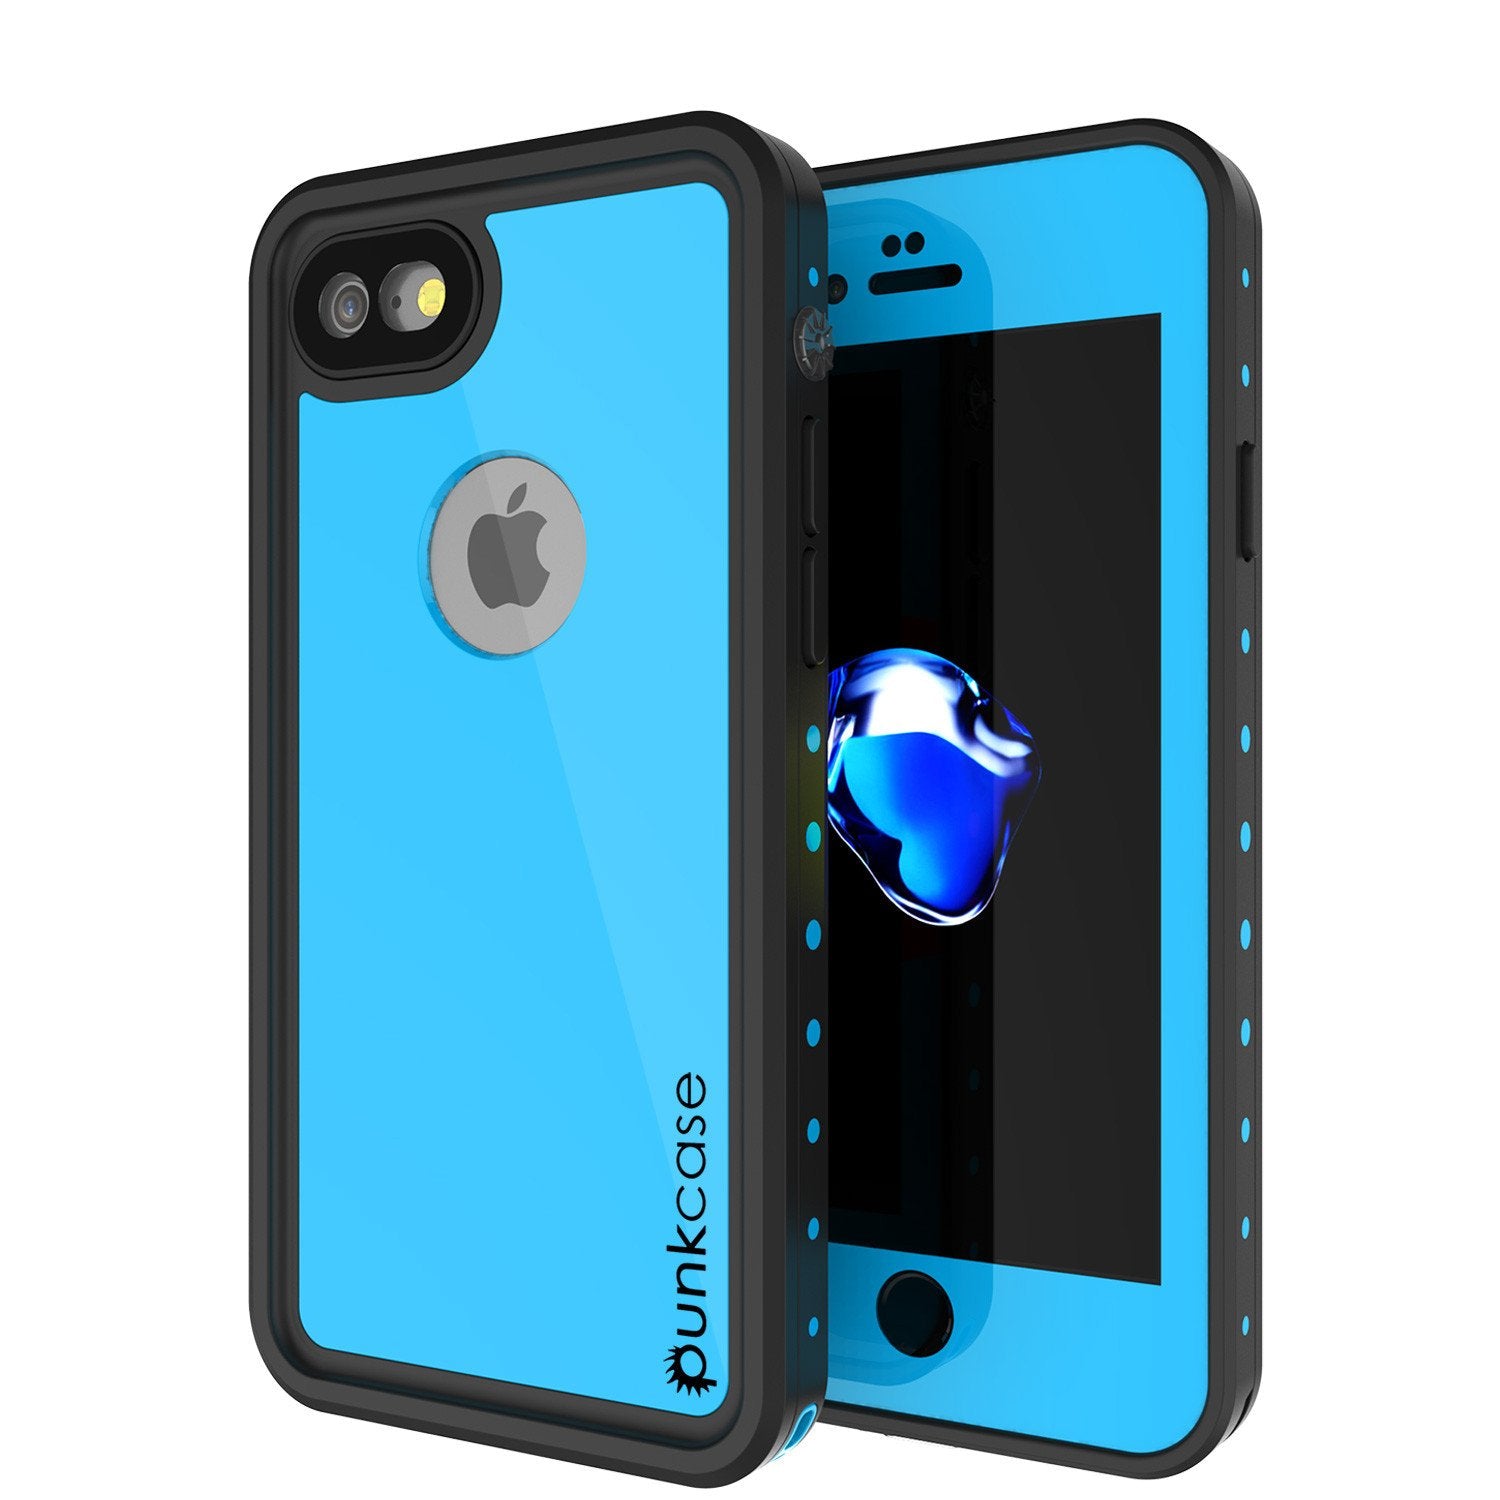 iPhone 7 Waterproof Case, Punkcase [Light Blue] [StudStar Series] [Slim Fit] [IP68 Certified] [Shockproof] [Dirtproof] [Snowproof] Armor Cover for Apple iPhone 7 & 7s